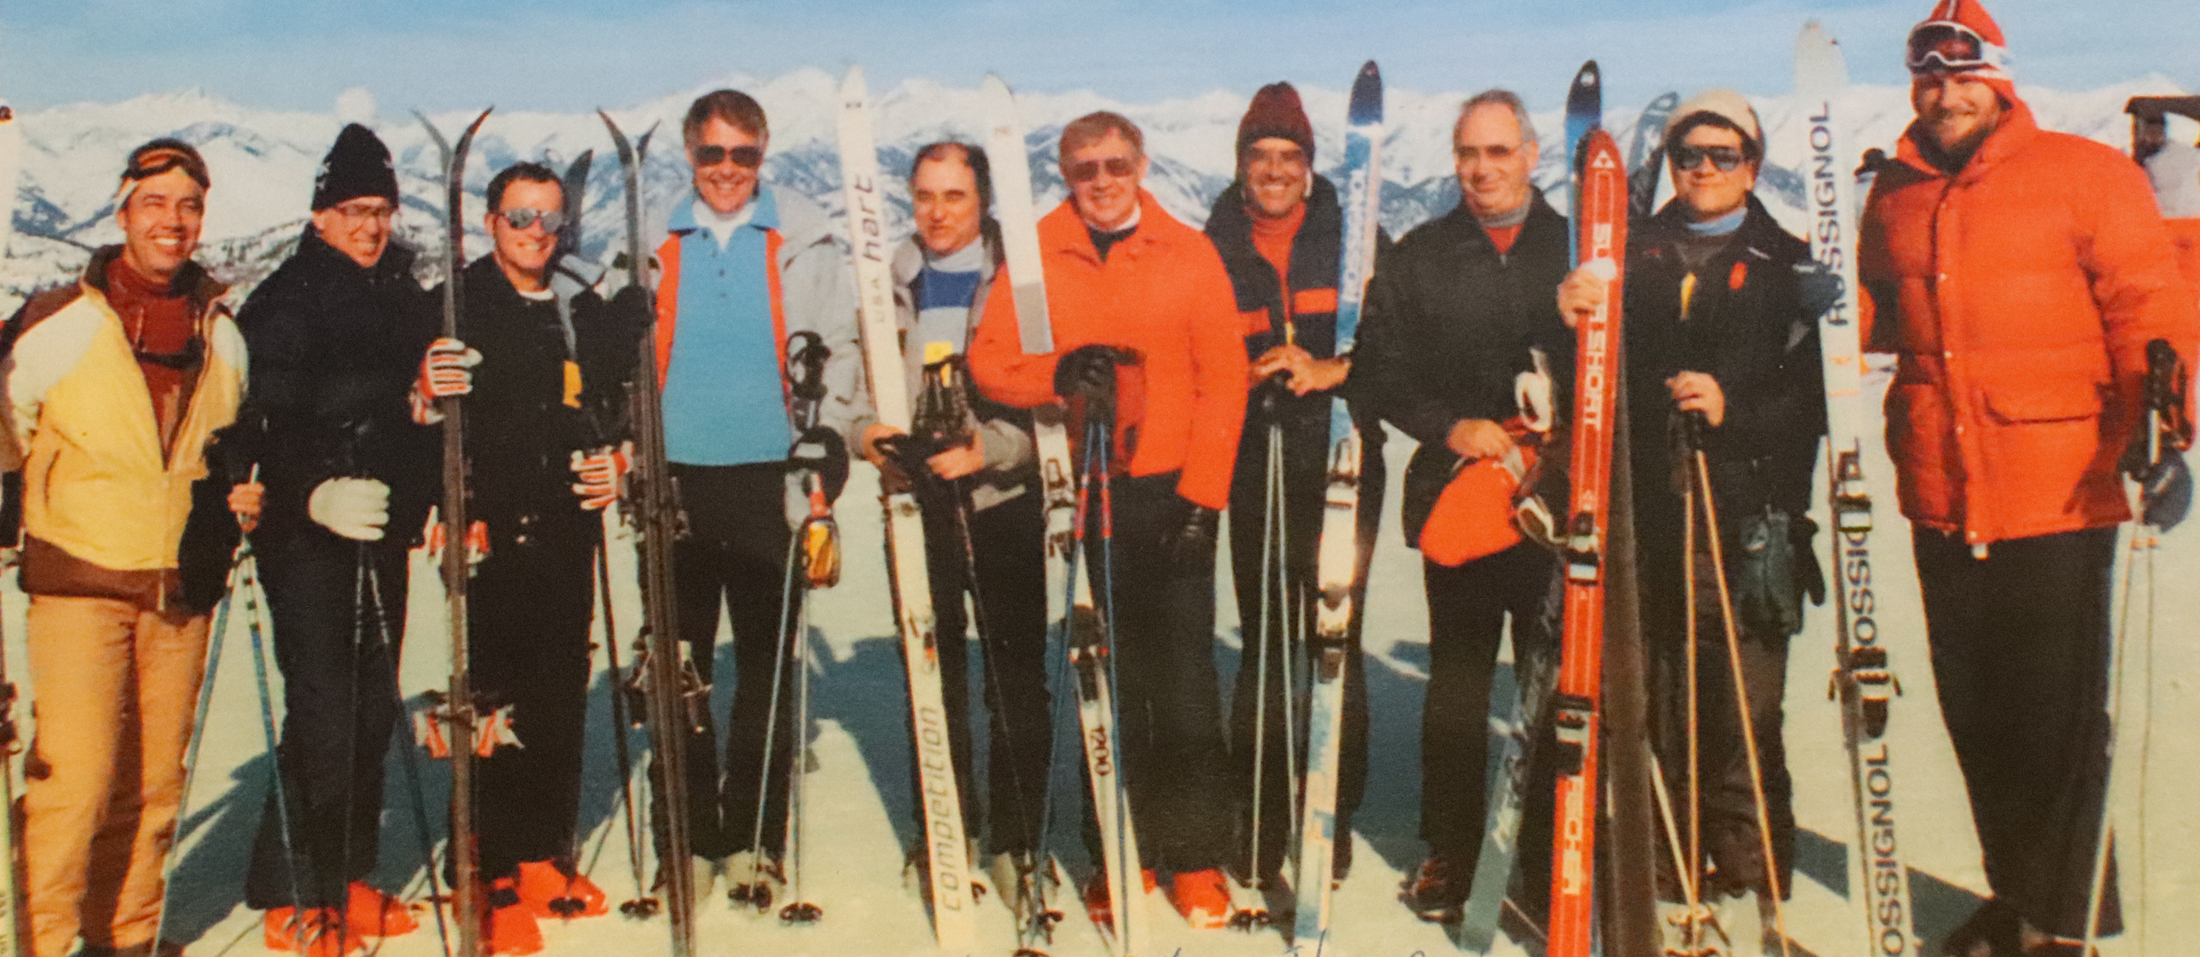 Cedar Valley Ski Club caps half-century journey